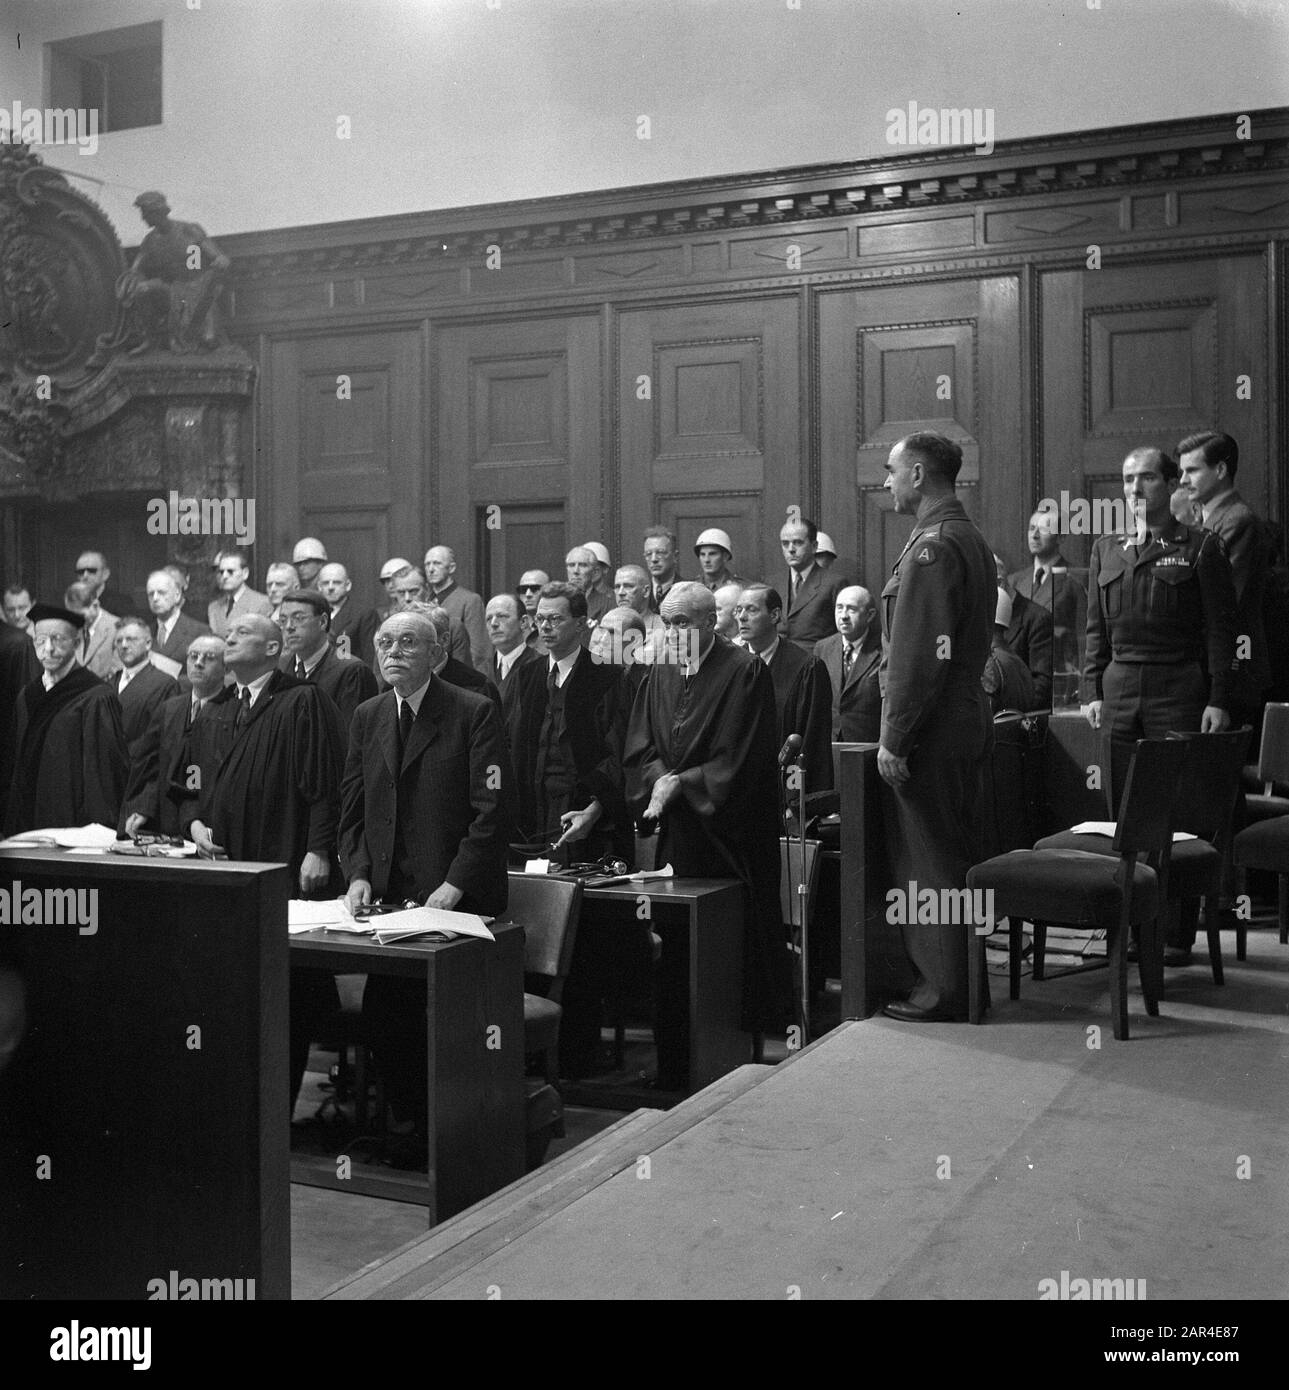 Process Nuremberg Date 4 December 1945 Location Nuremberg Keywords War Criminals Trials Justice World War Ii 2AR4E87 